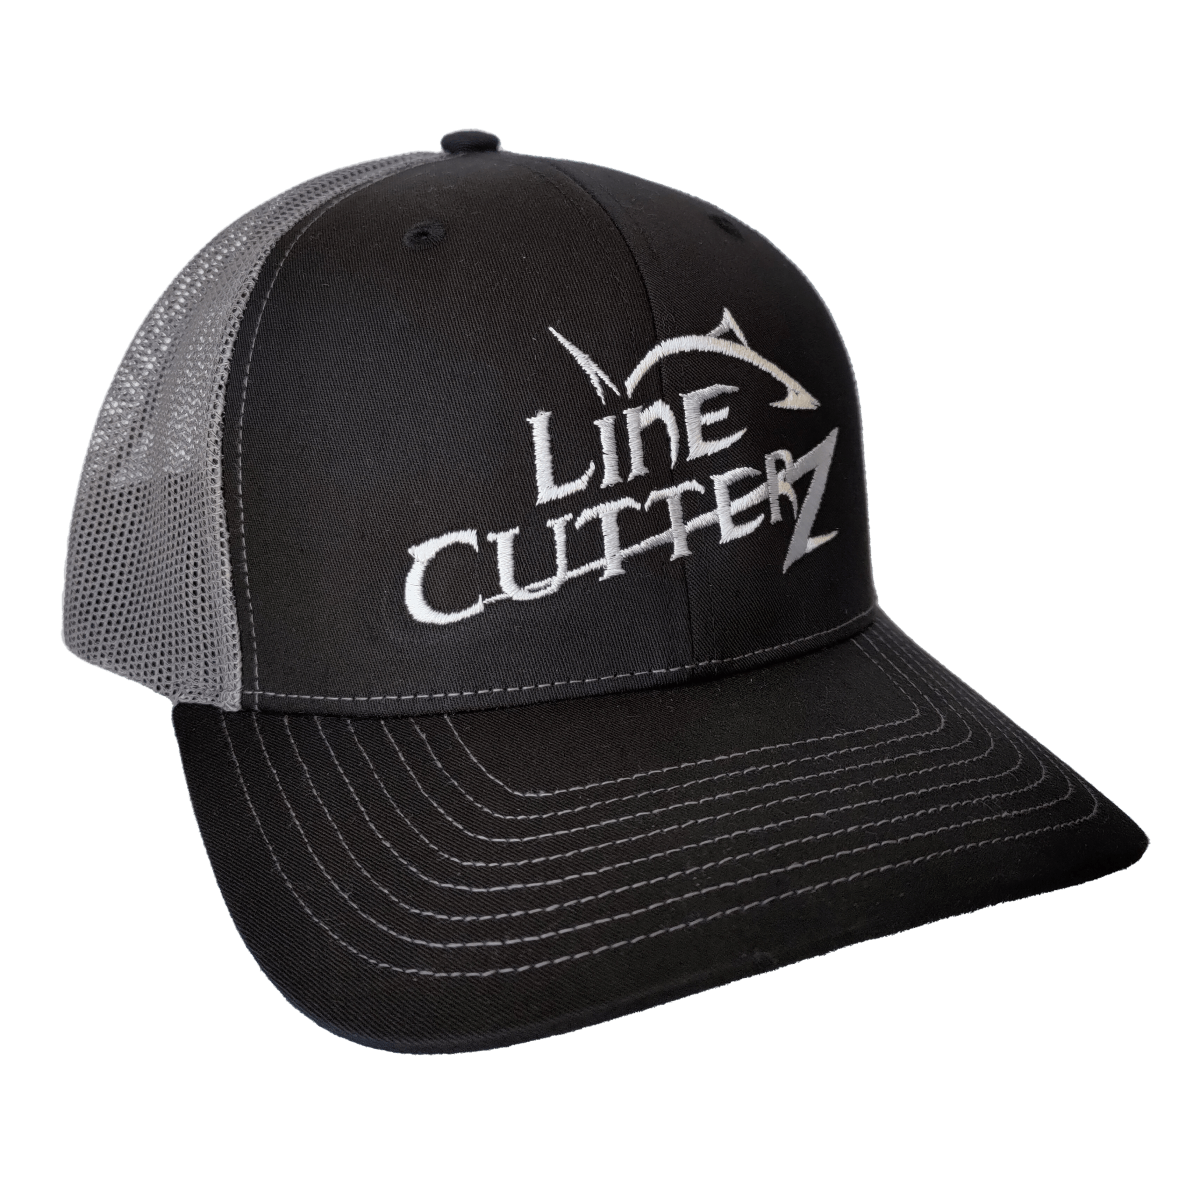 Line Cutterz Meshback Trucker Snapback Hats Line Cutterz Black/Grey 